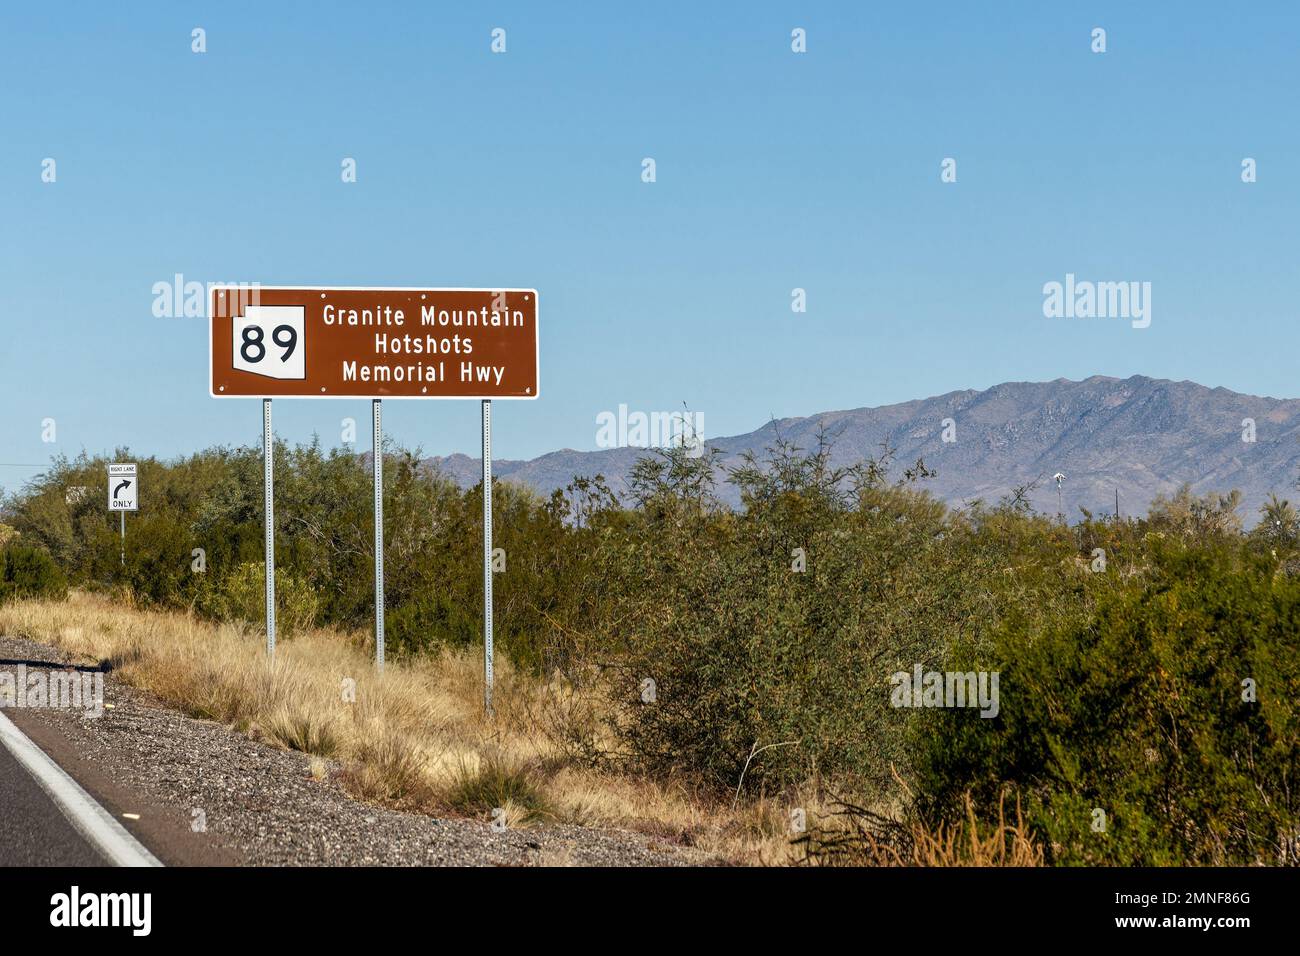 Granite Mountain Hotshots Memorial Highway Route 89 sign in Arizona Stock Photo